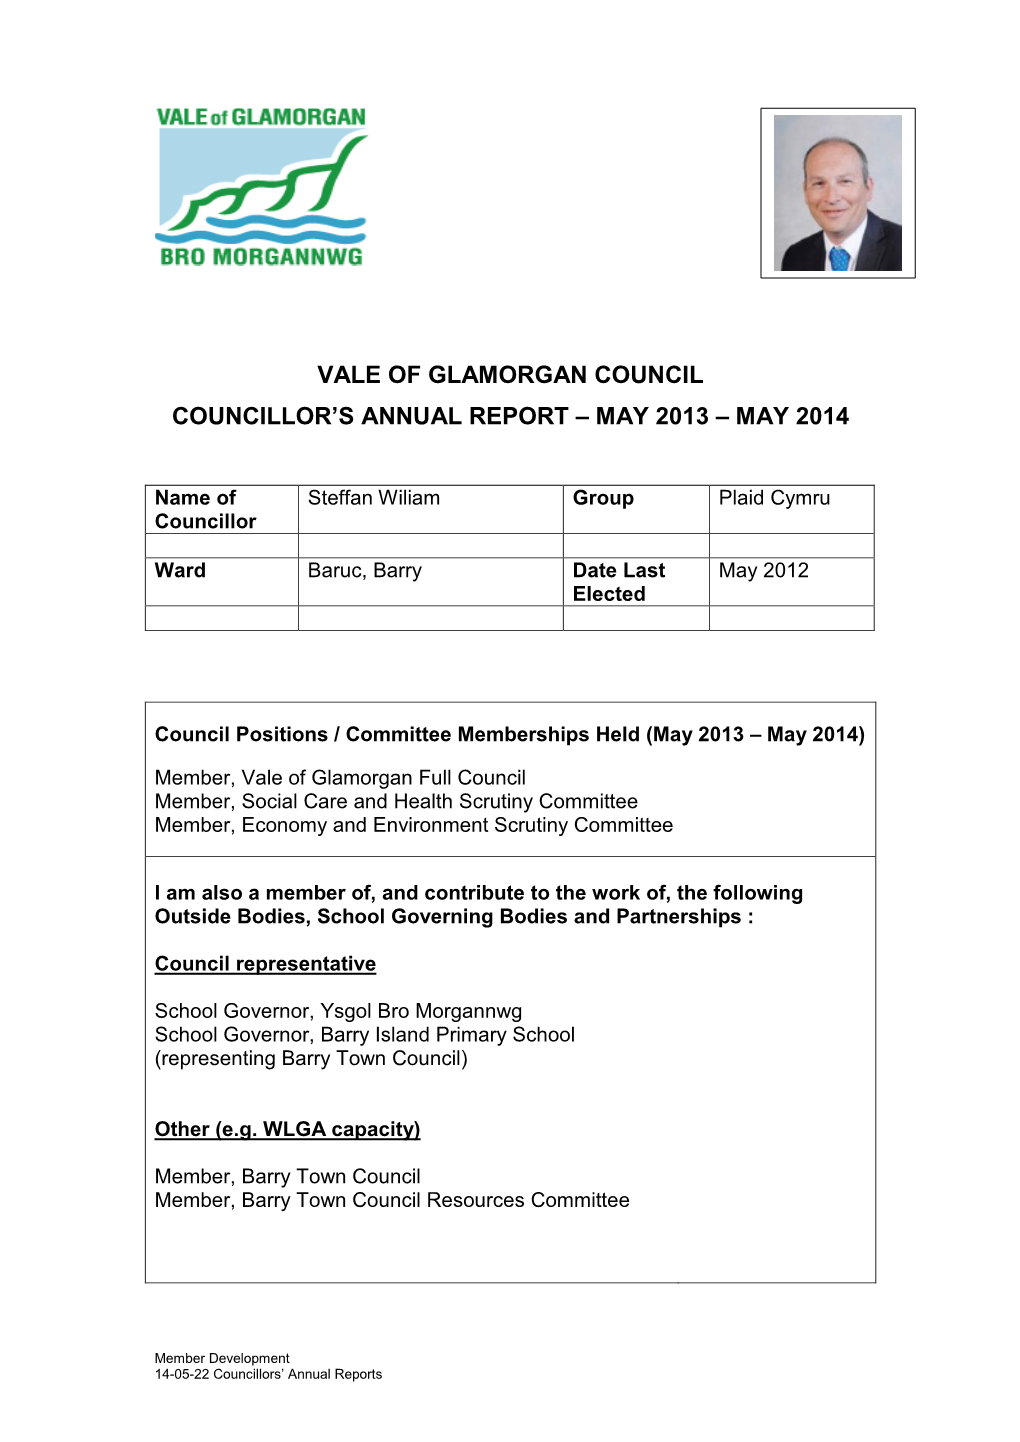 Vale of Glamorgan Council Councillor's Annual Report – May 2013 – May 2014